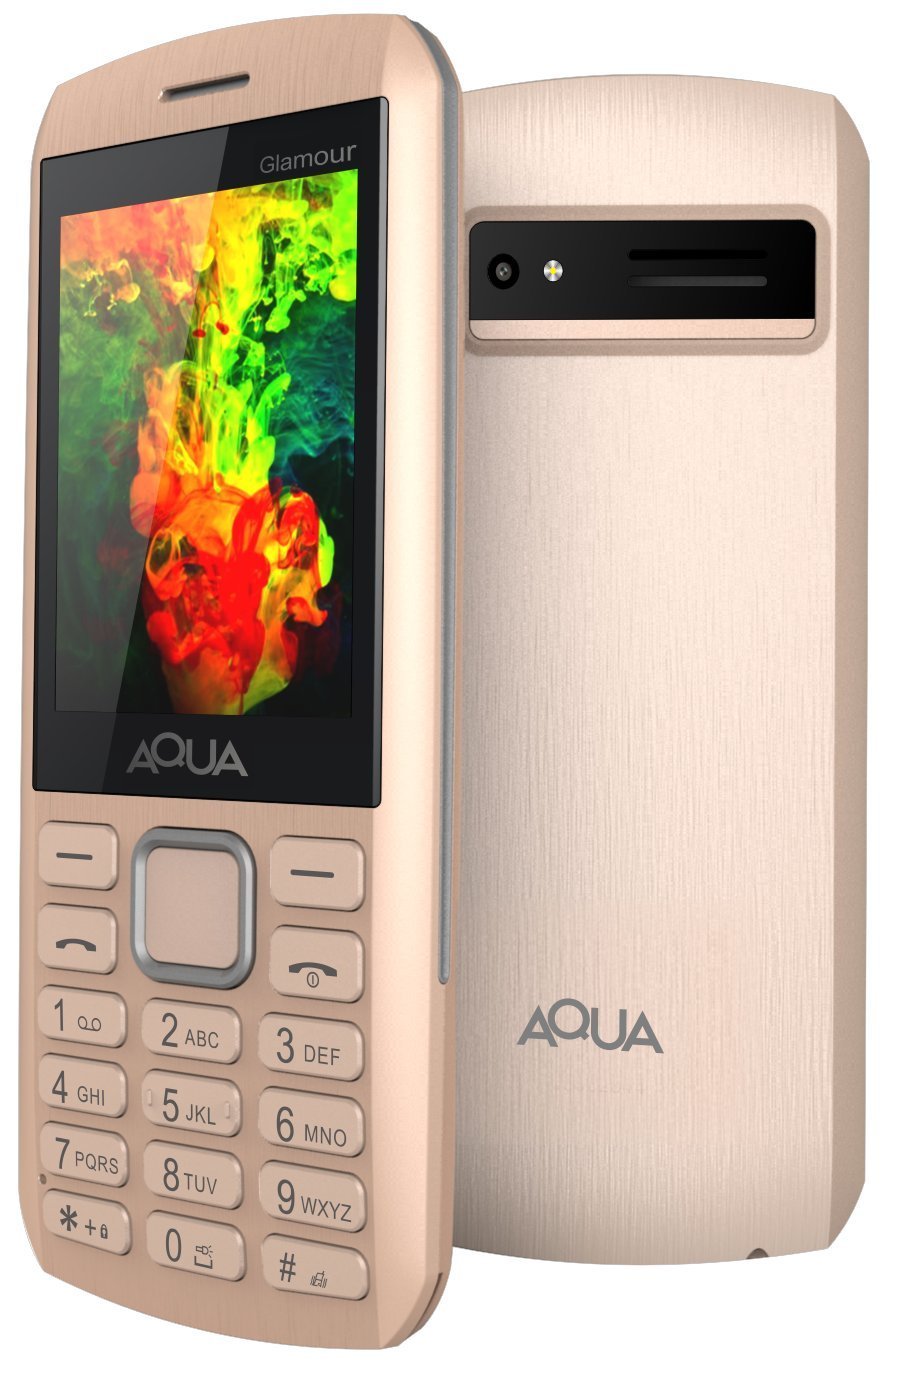 Aqua Glamour Gorgeous Dual Sim 2.4 inch Big Screen 1500 mAh Powerful Battery Mobile Phone